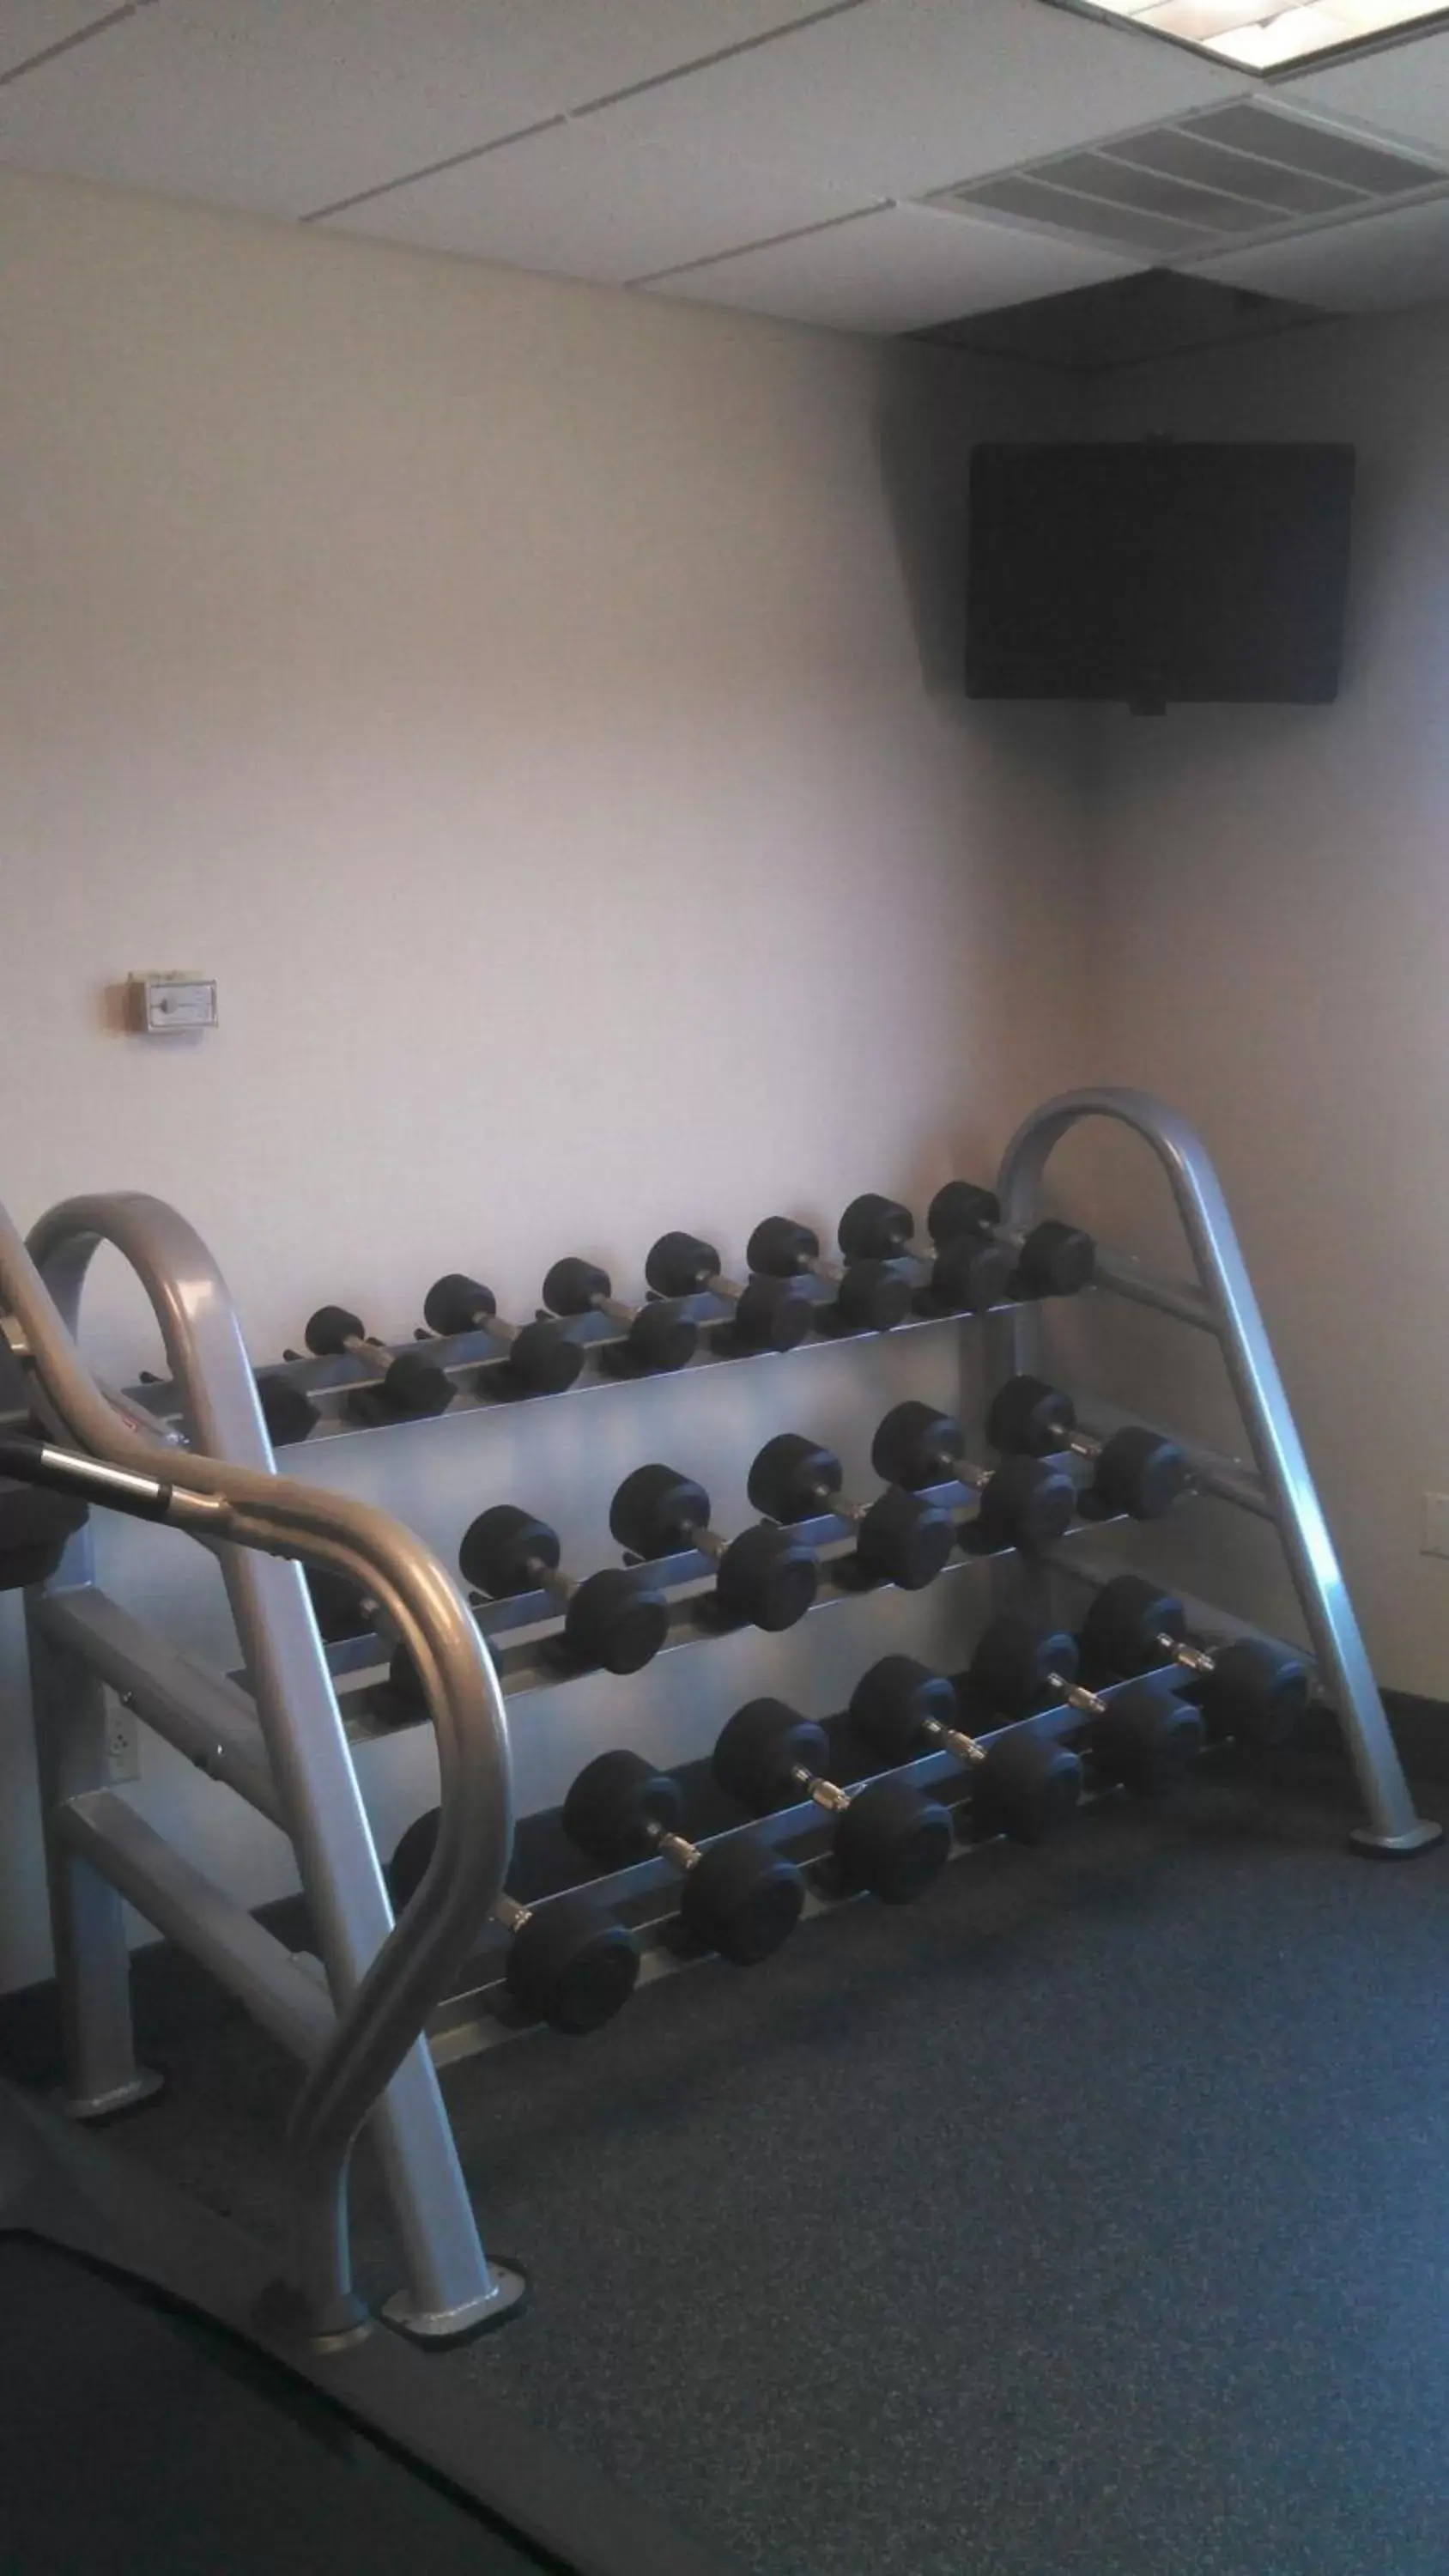 Fitness centre/facilities, Fitness Center/Facilities in Hampton Inn Greenwood